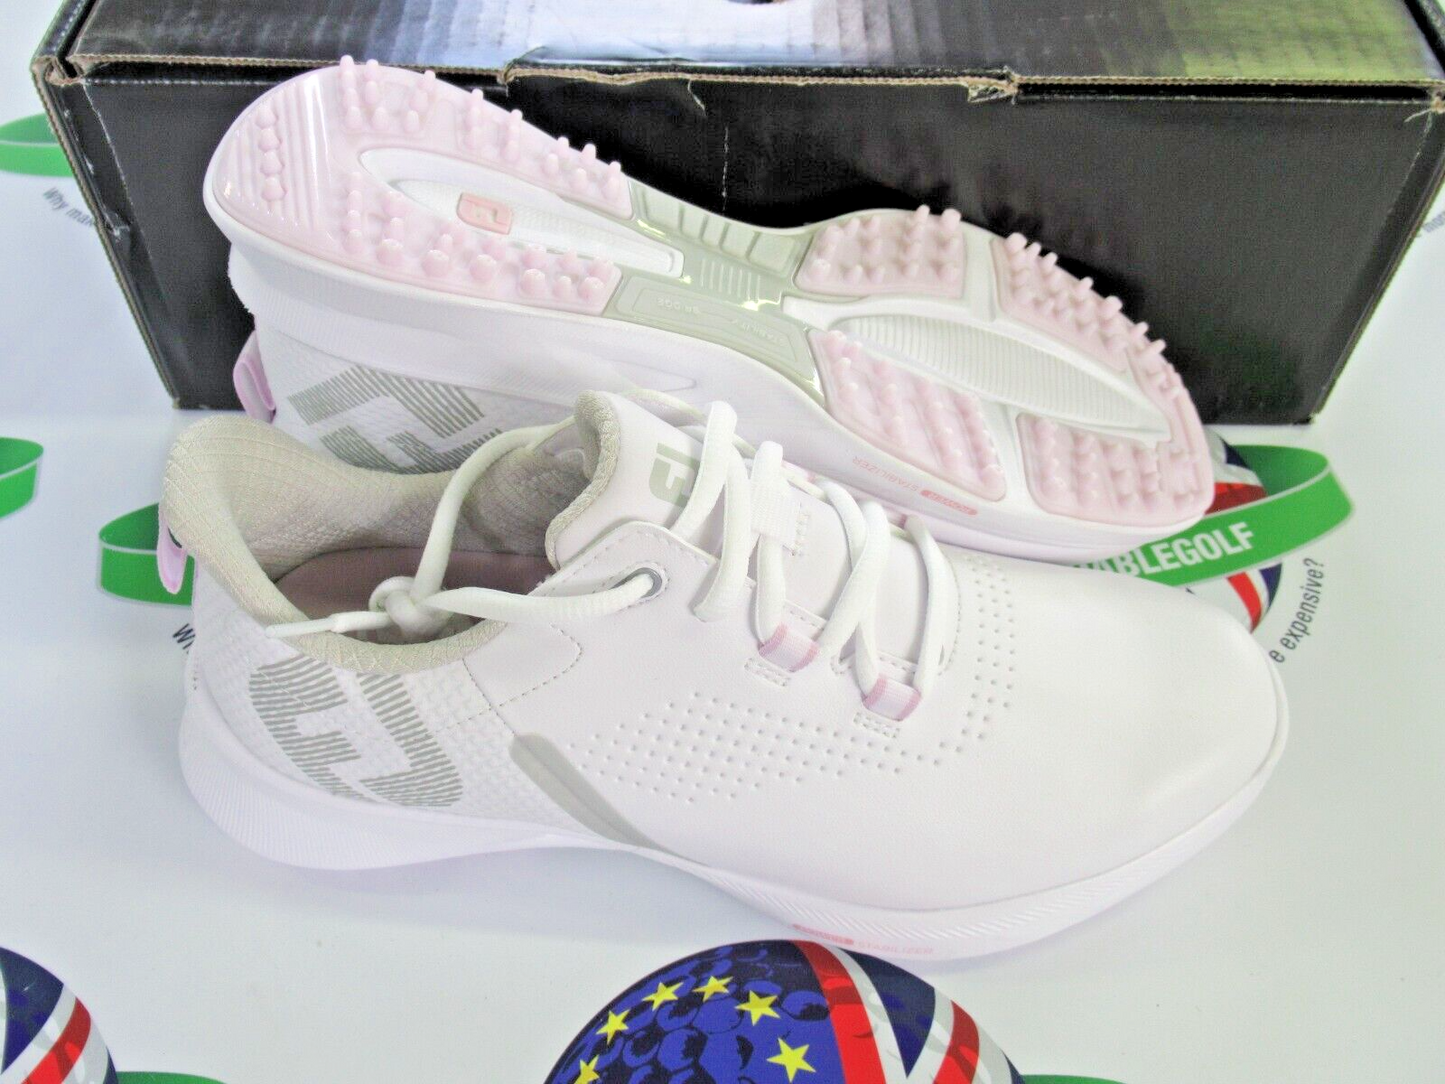 footjoy fuel womens golf shoes white/grey/pink 92373k uk size 6.5 medium